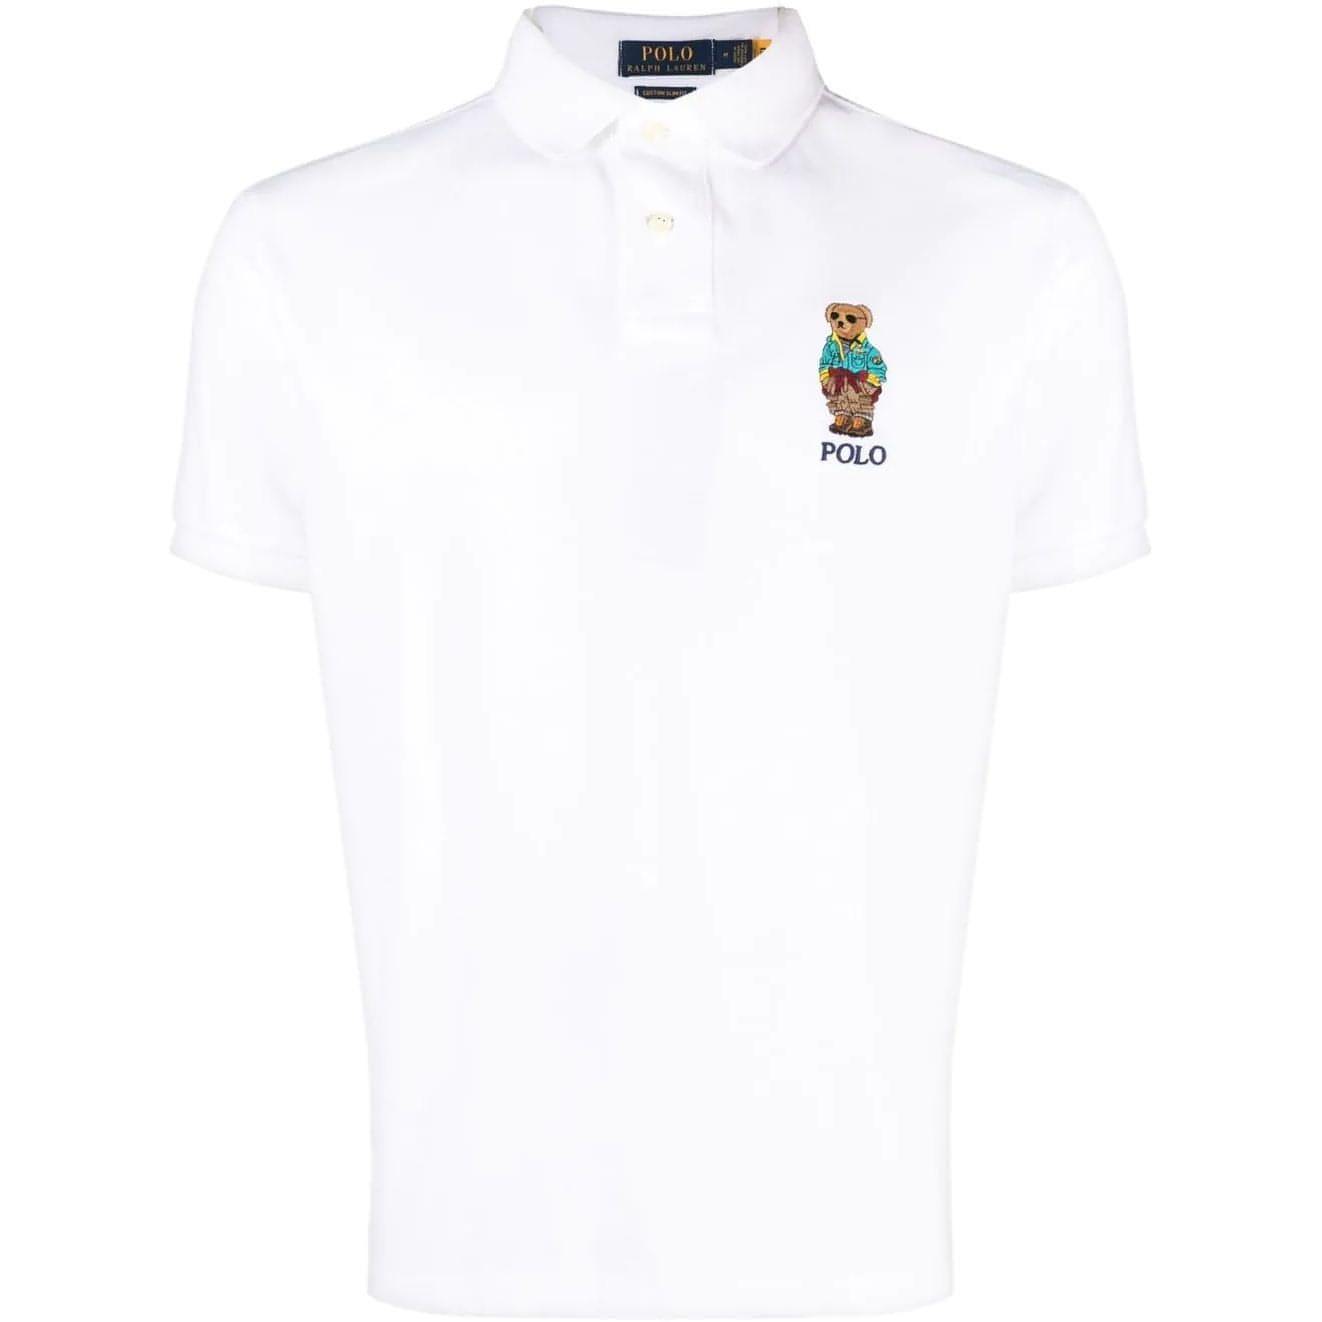 POLO RALPH LAUREN vyriški balti marškinėliai Slim POLO bear jersey t-shirt